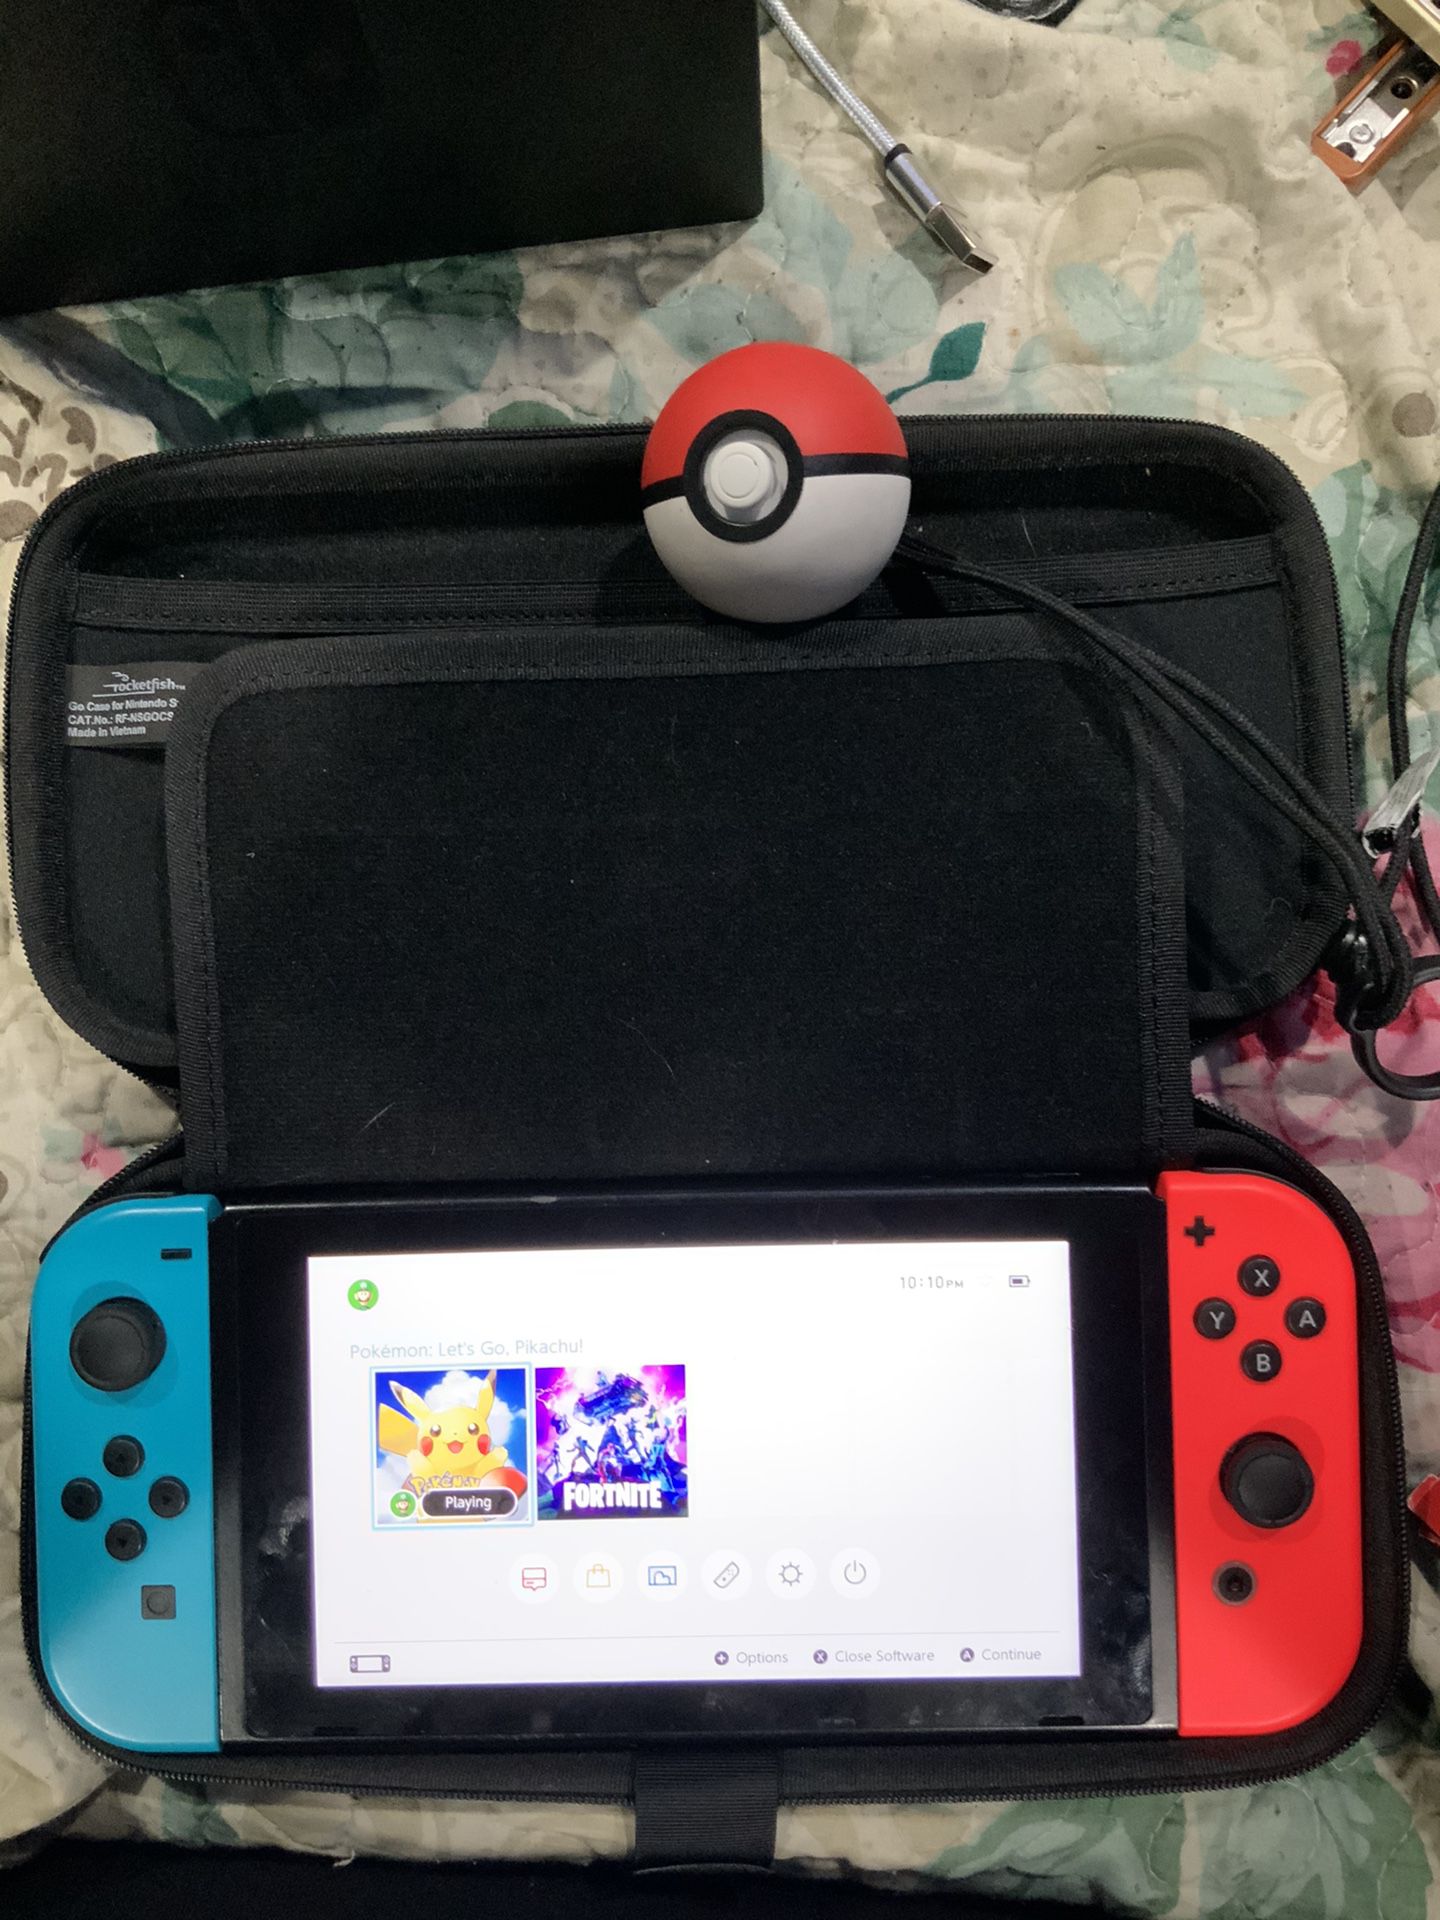 Nintendo switch Pokémon go edition with poke ball control 64 go sd card and games